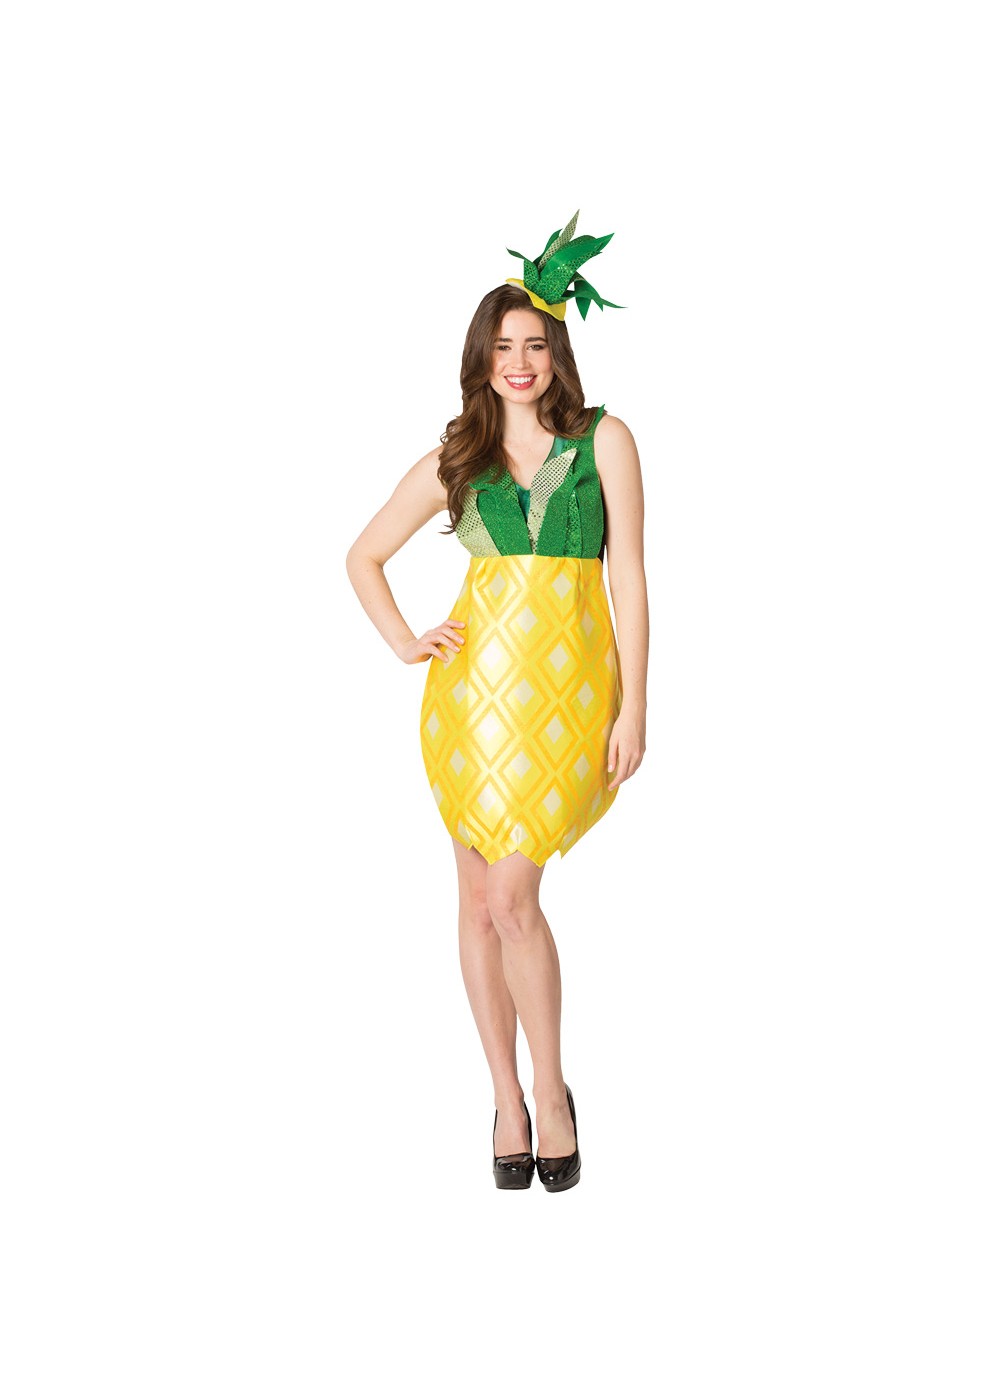 Womens Pineapple Dress Costume